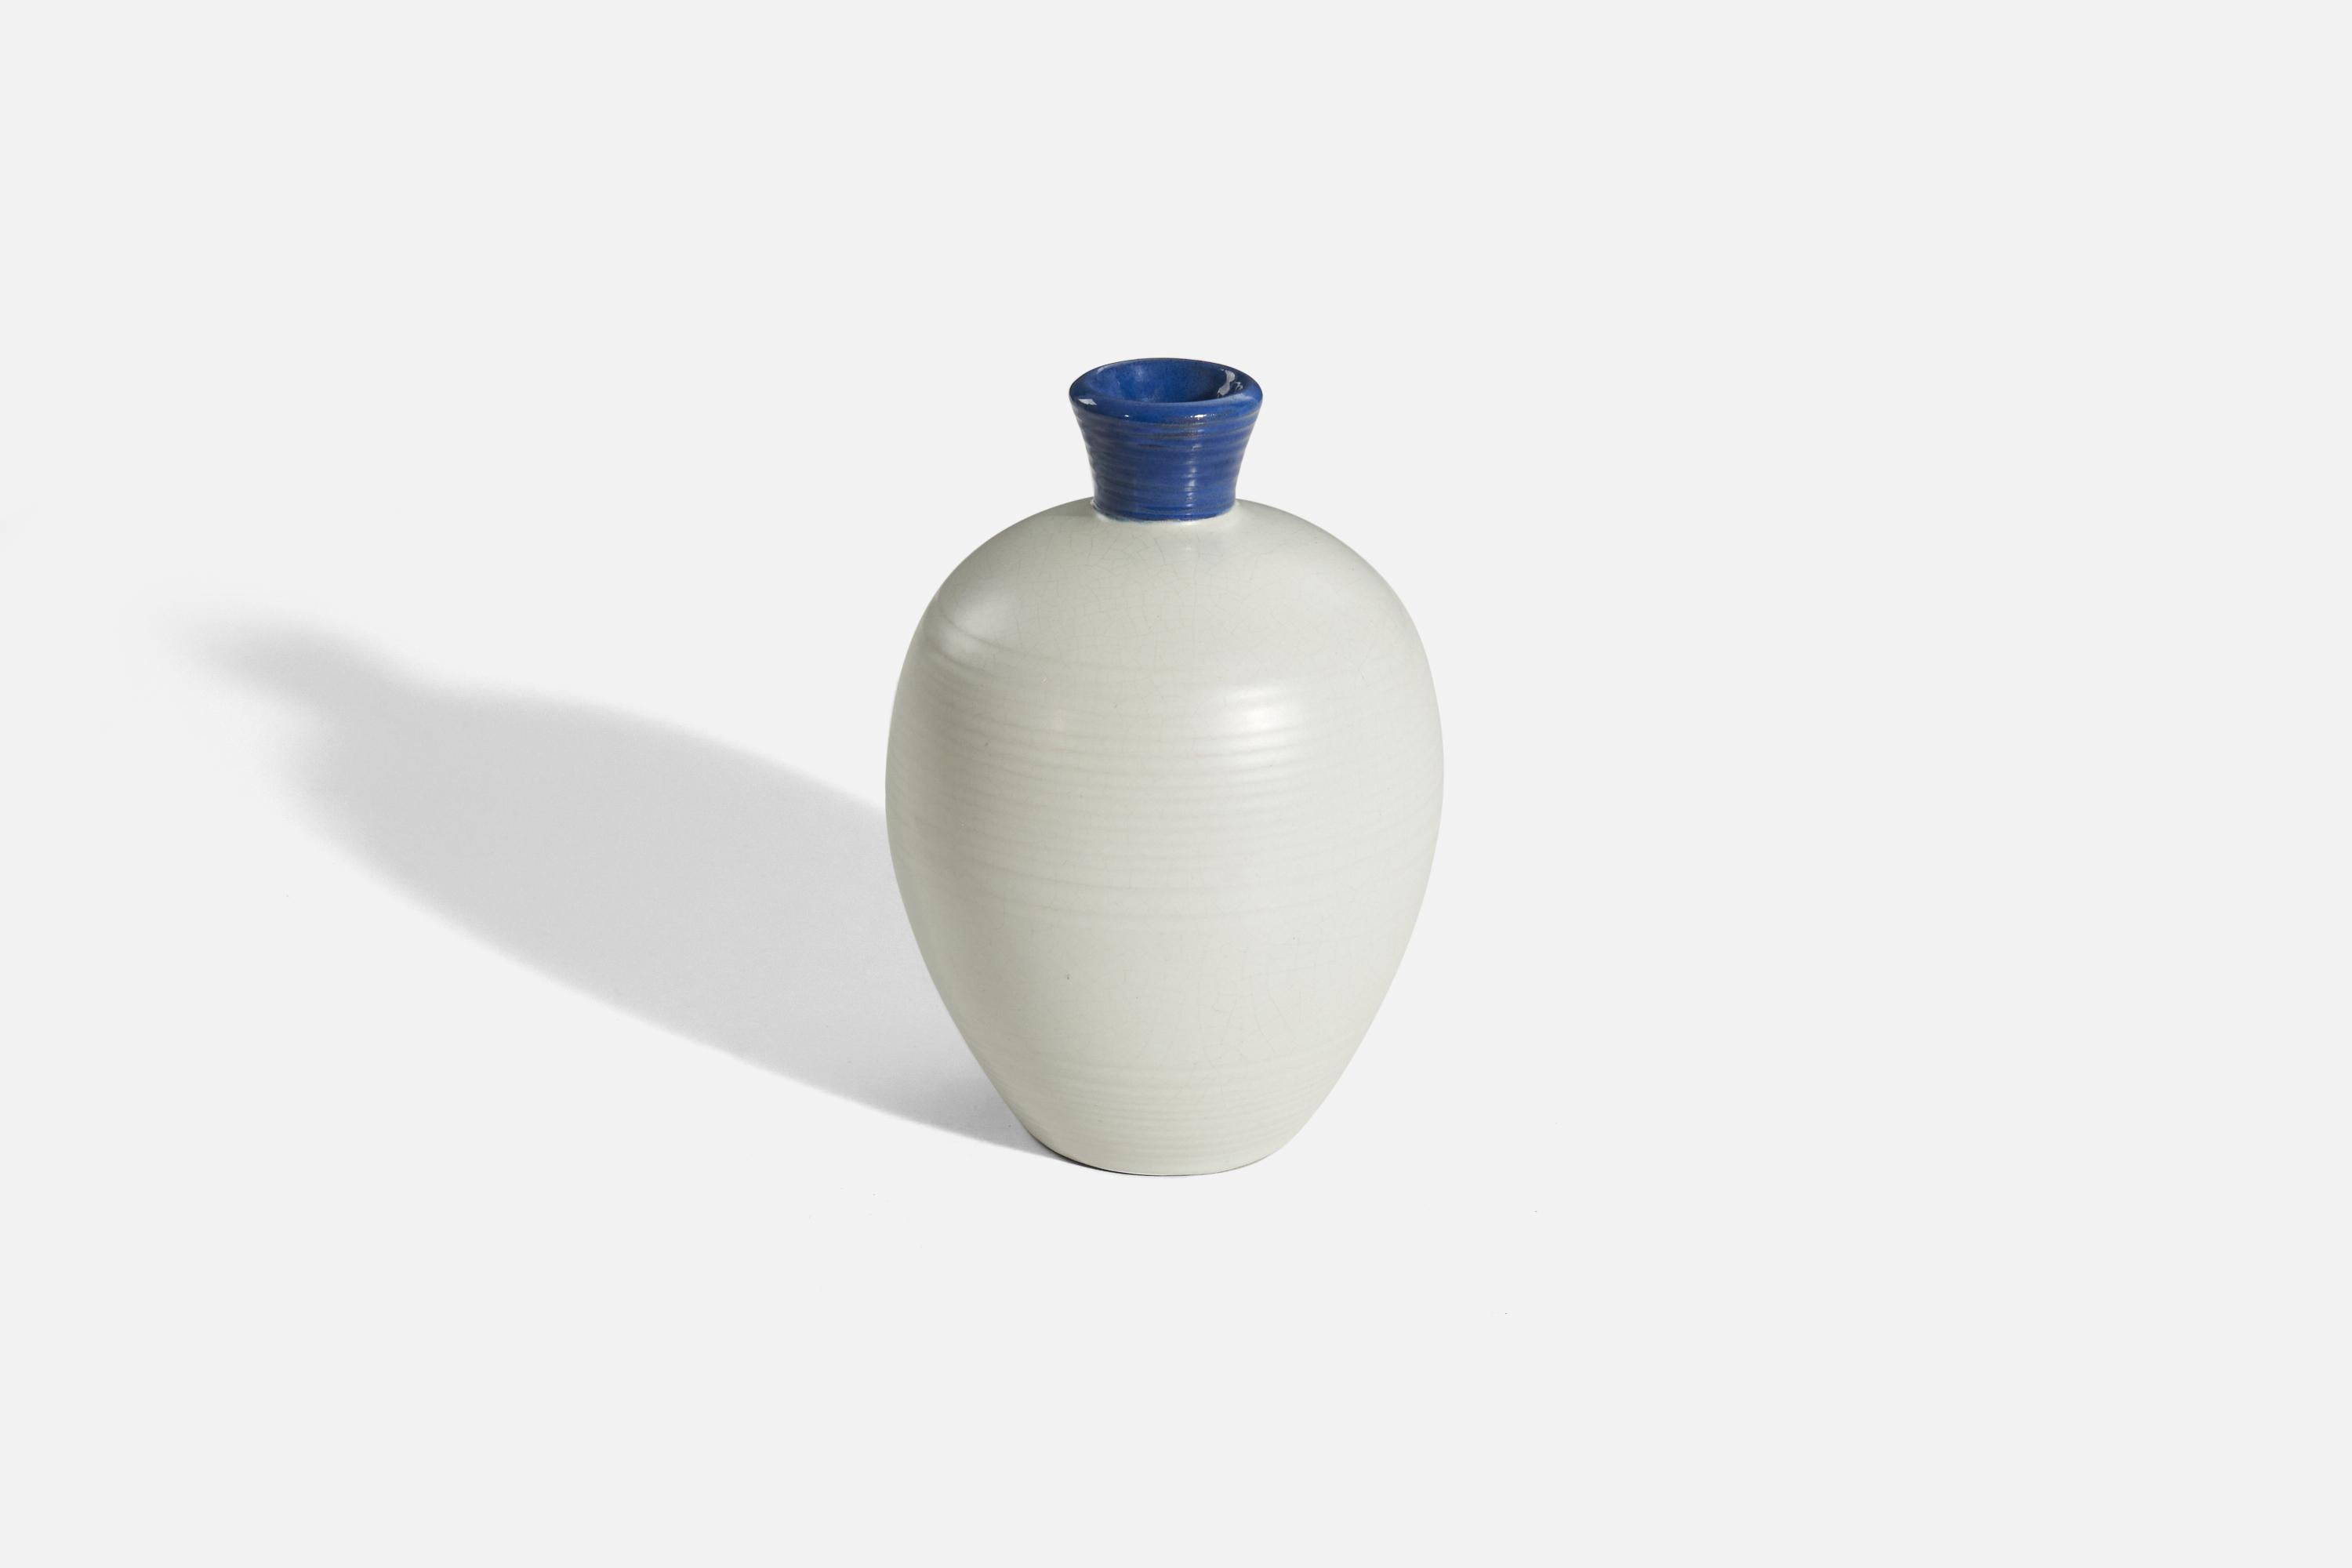 Scandinavian Modern Upsala-Ekeby, Vase, Blue and White-Glazed Earthenware, Sweden, 1940s For Sale